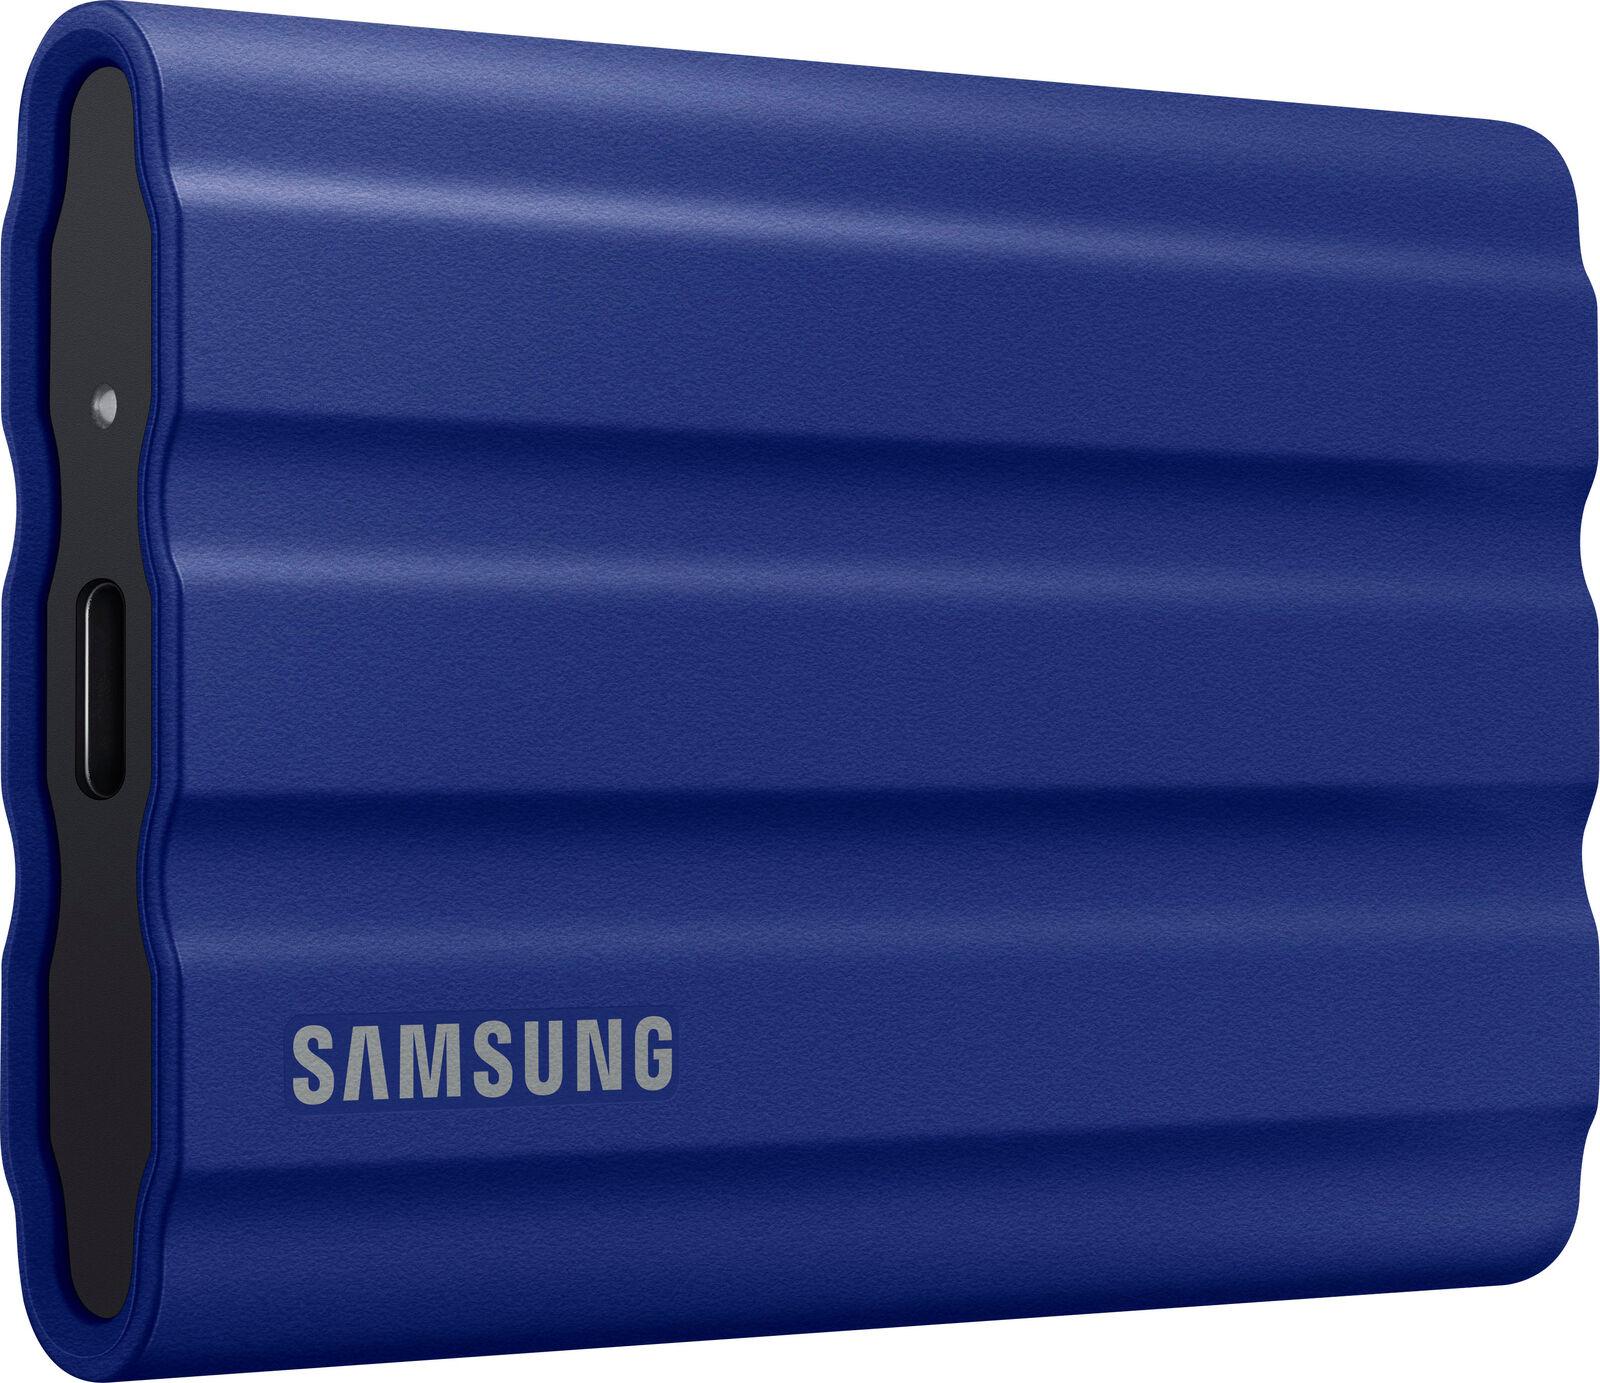 2TB Samsung T7 Shield External USB 3.2 Gen 2 SSD Solid State Drive $129.99 Shipped